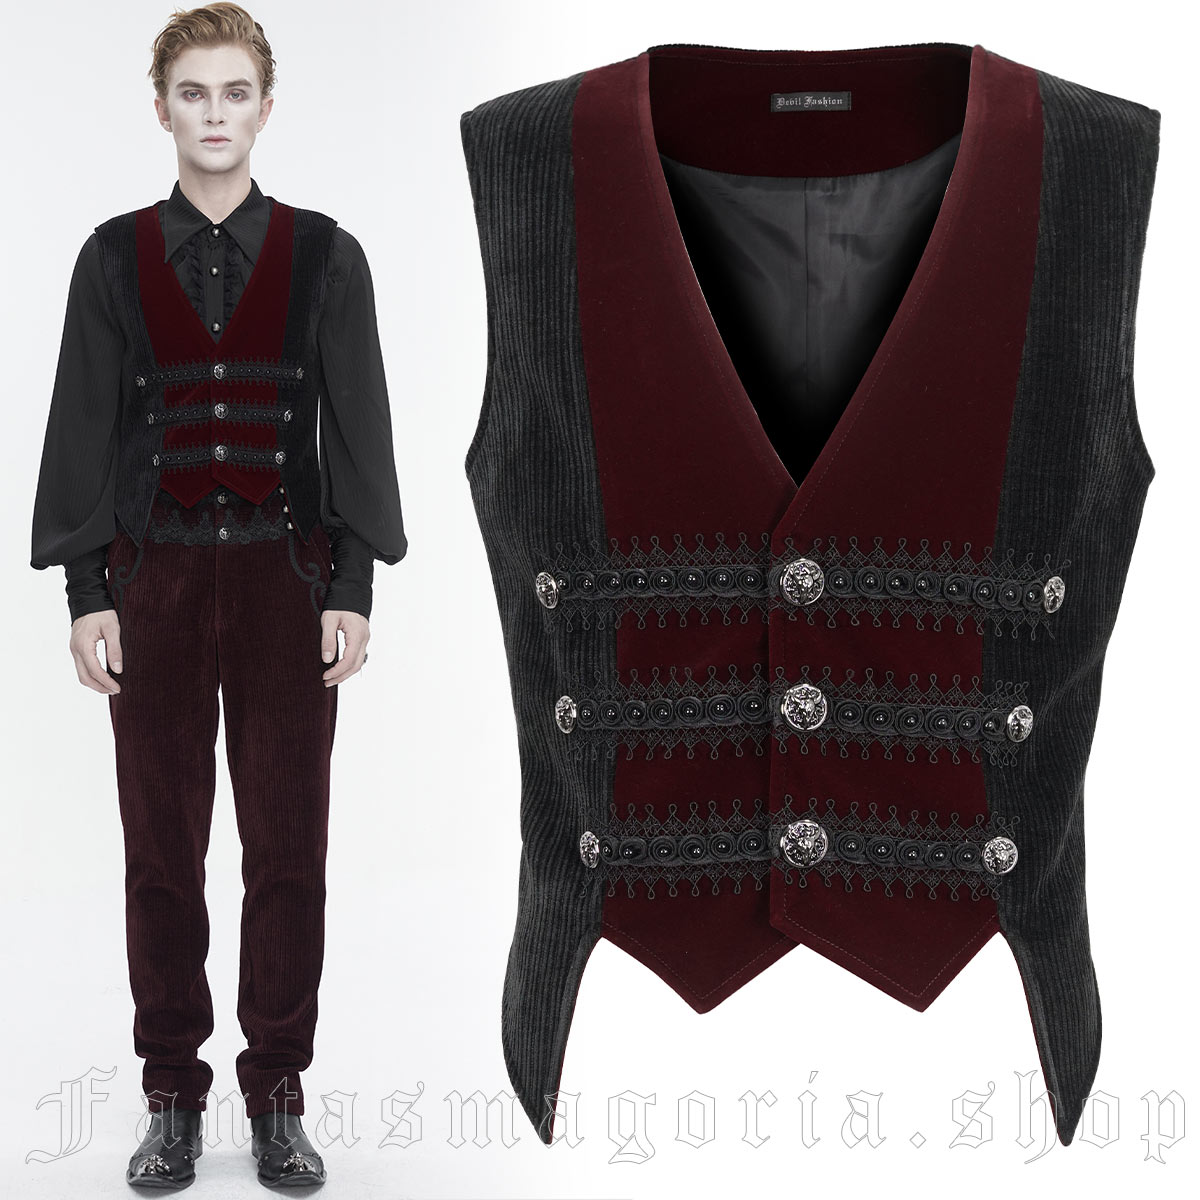 Taurus Black and Red Vest. - Devil Fashion - WT07902